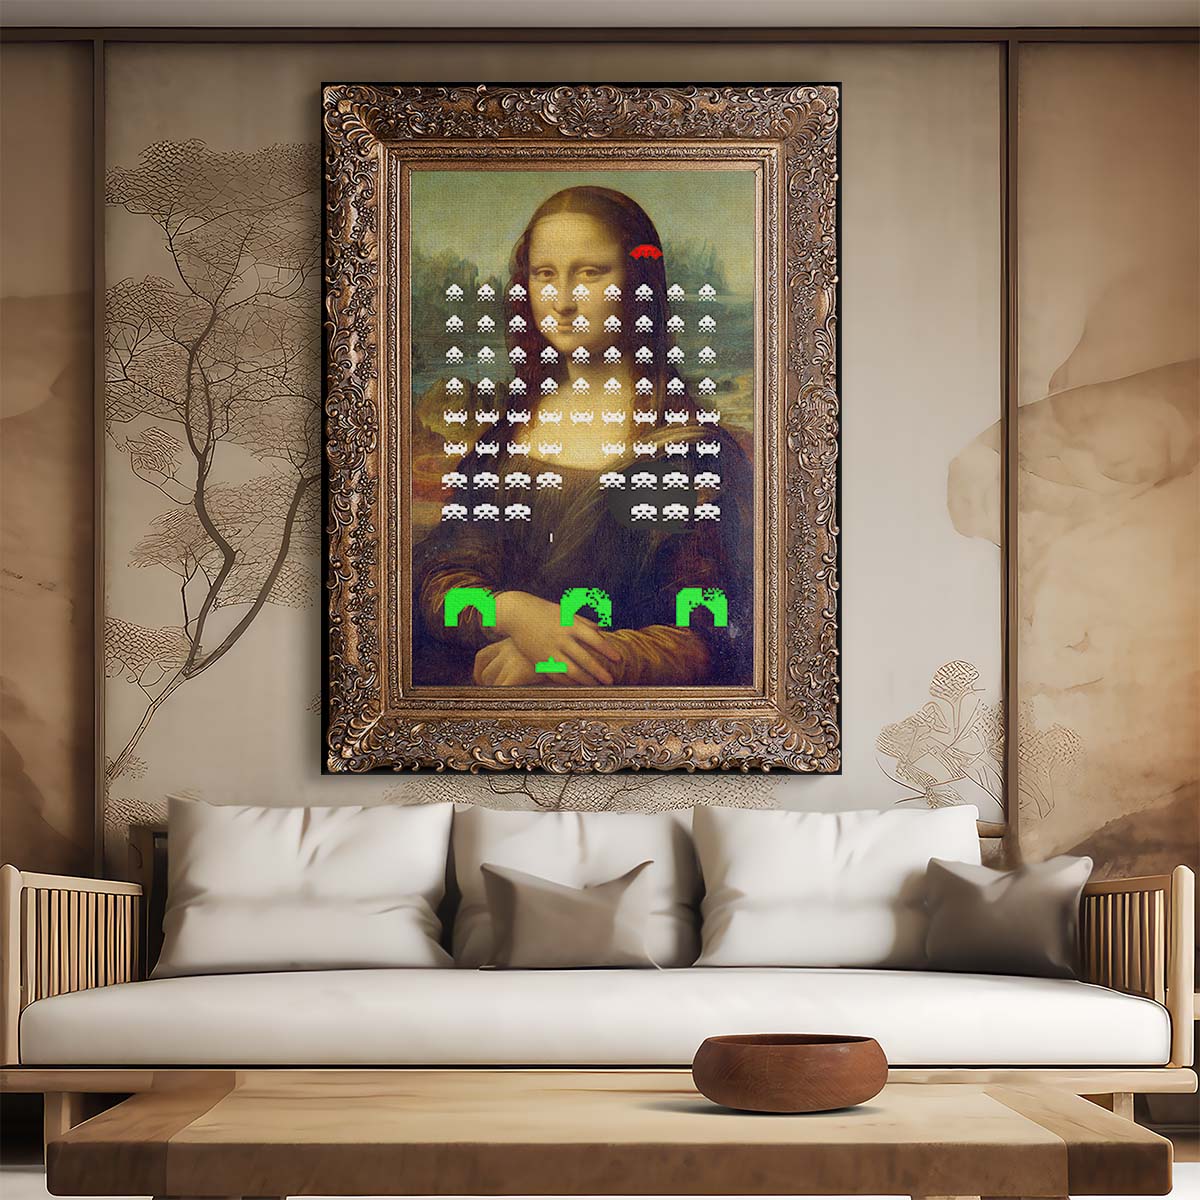 Mona Lisa Da Vinci Invaders Wall Art by Luxuriance Designs. Made in USA.